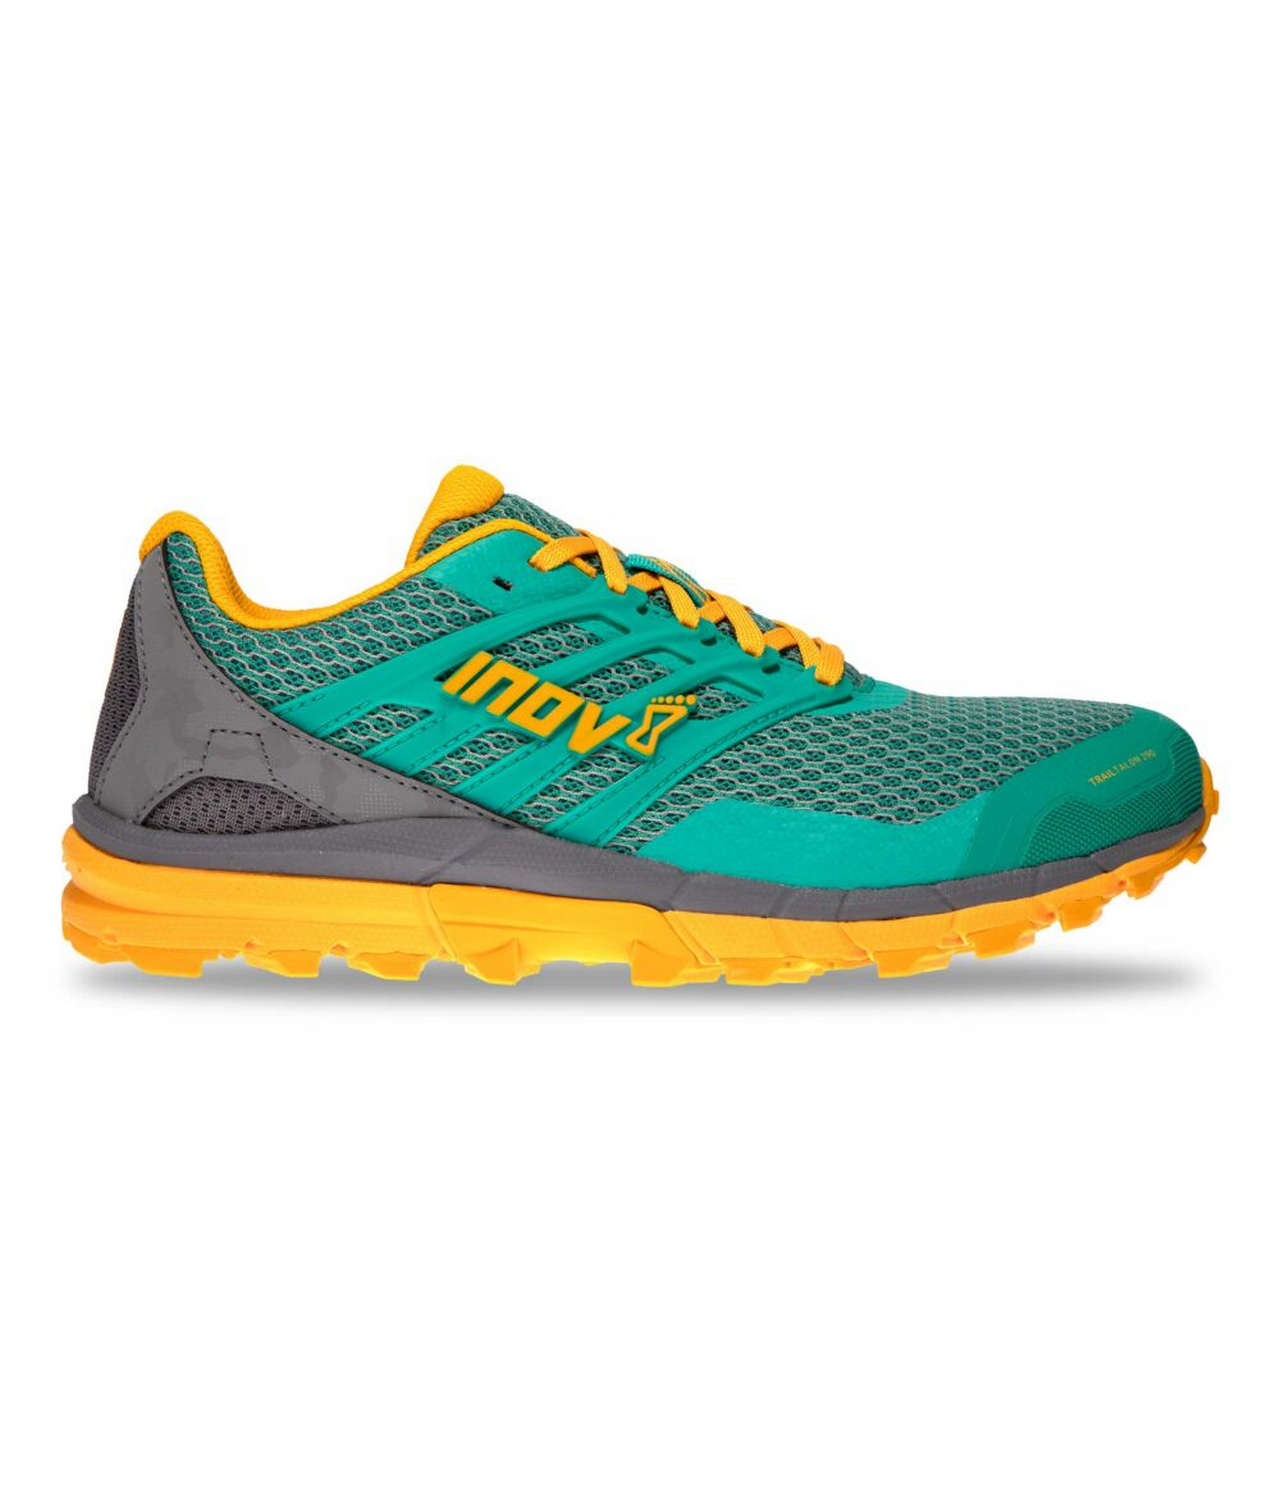 Inov-8 Trailtalon 290 - Trail running shoes Men's, Free EU Delivery